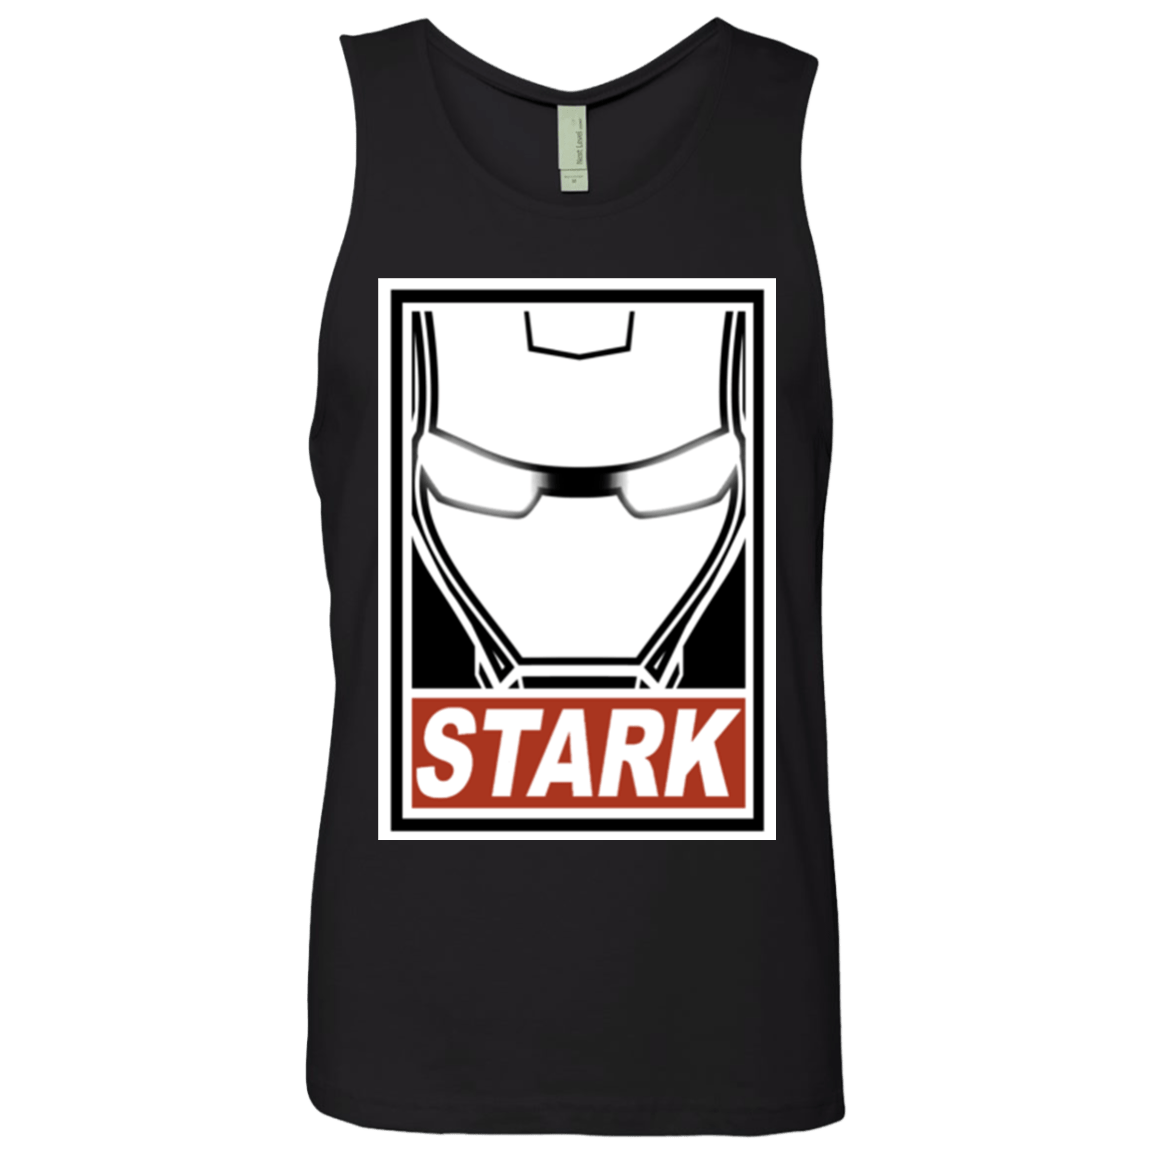 Obey Stark Men's Premium Tank Top